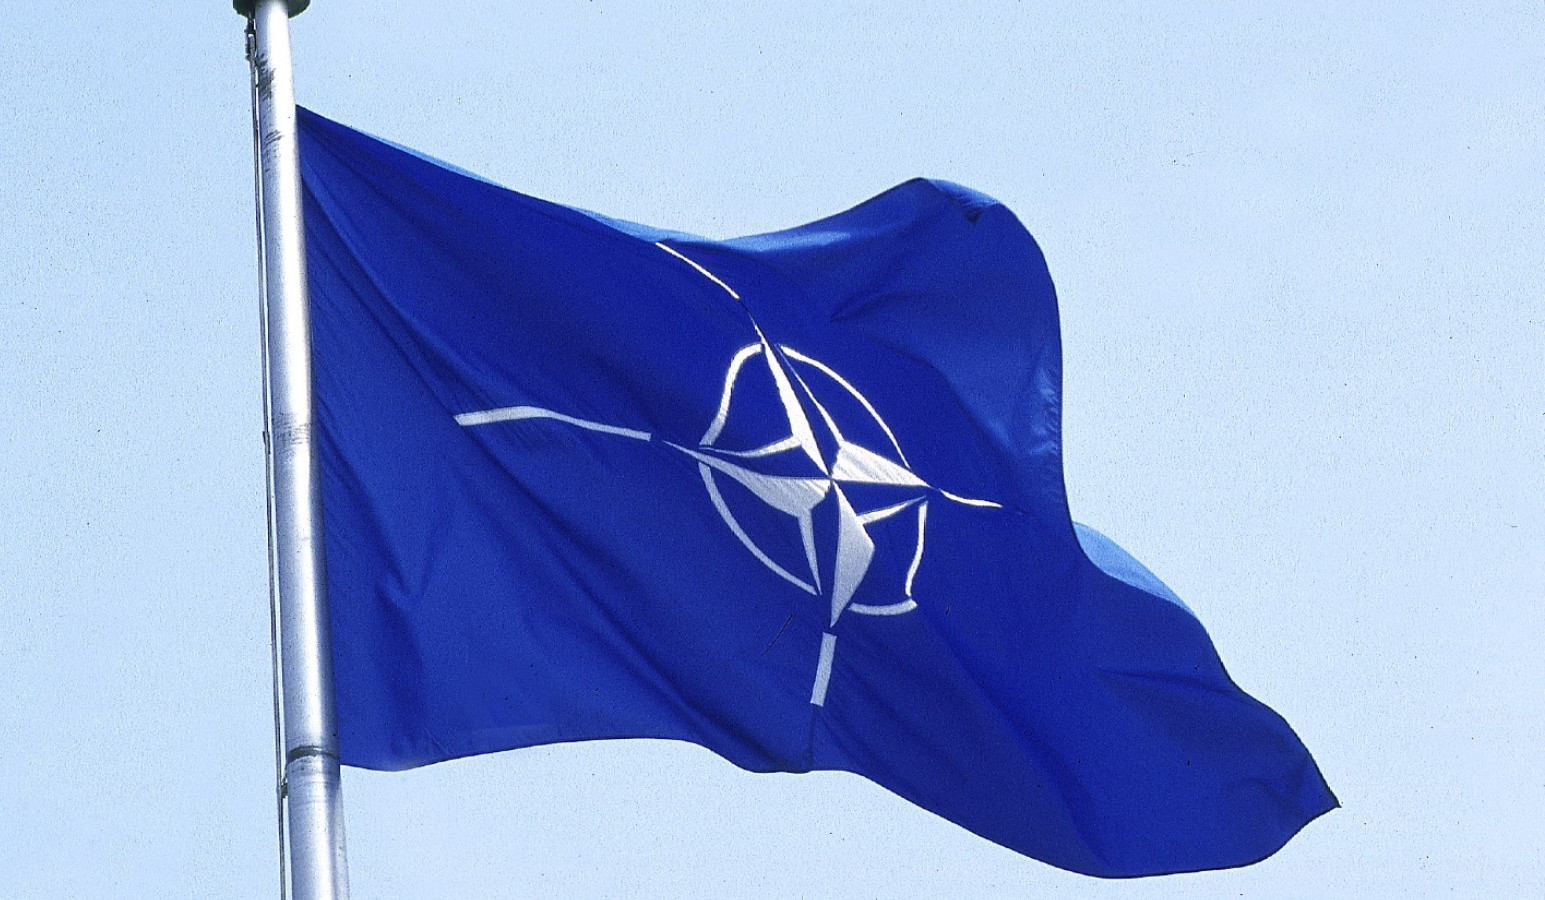 NATO calls for immediate cessation of hostilities, Deputy Assistant Secretary General